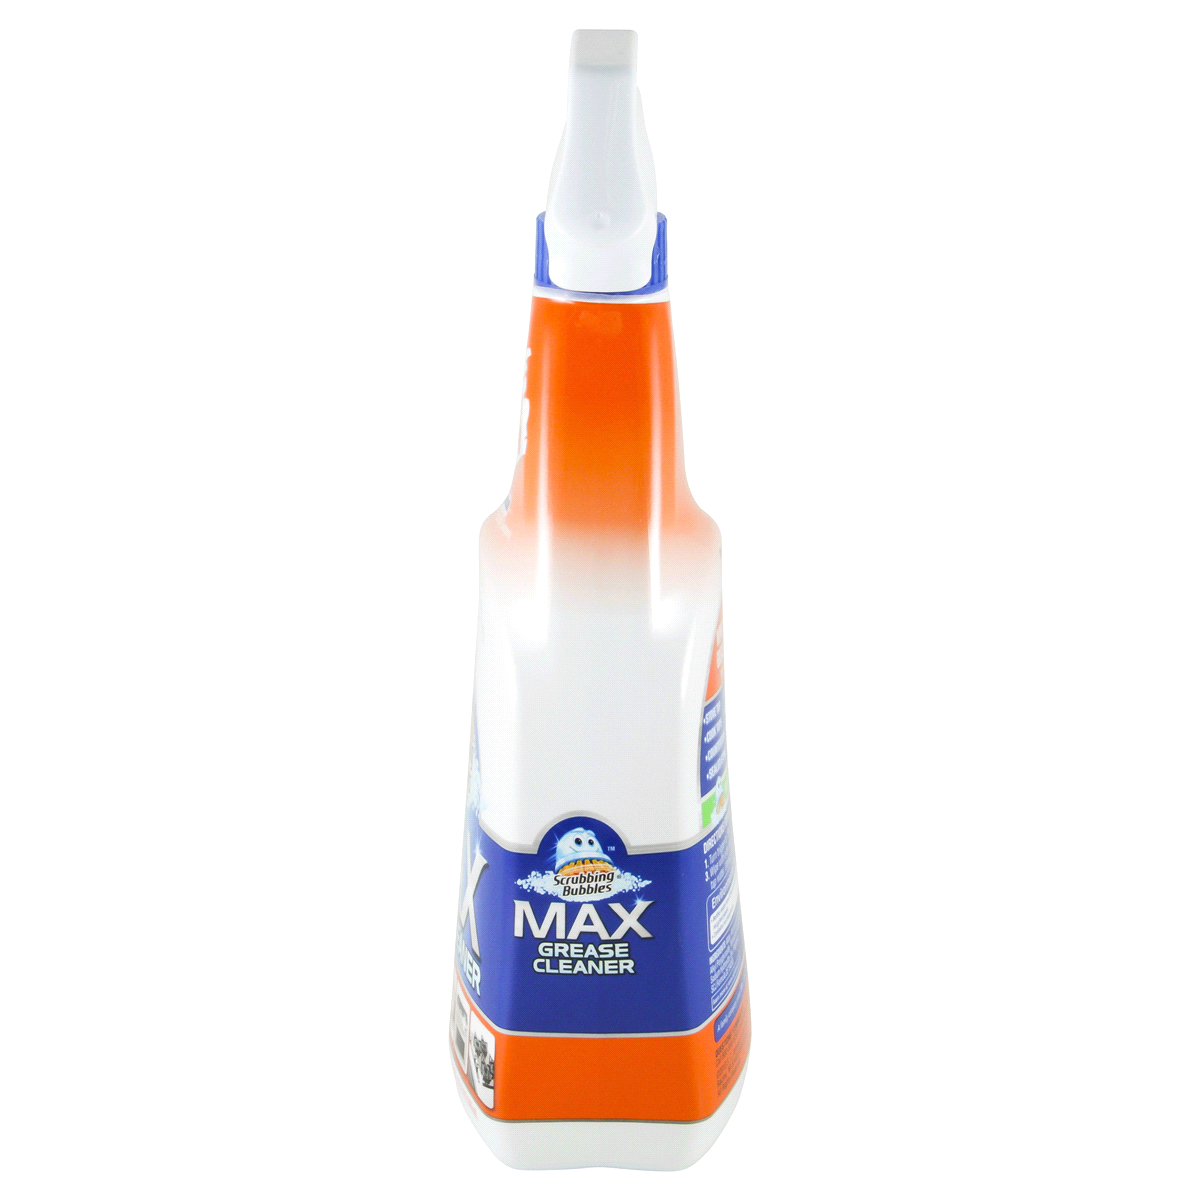 Scrubbing Bubbles Max Grease Cleaner